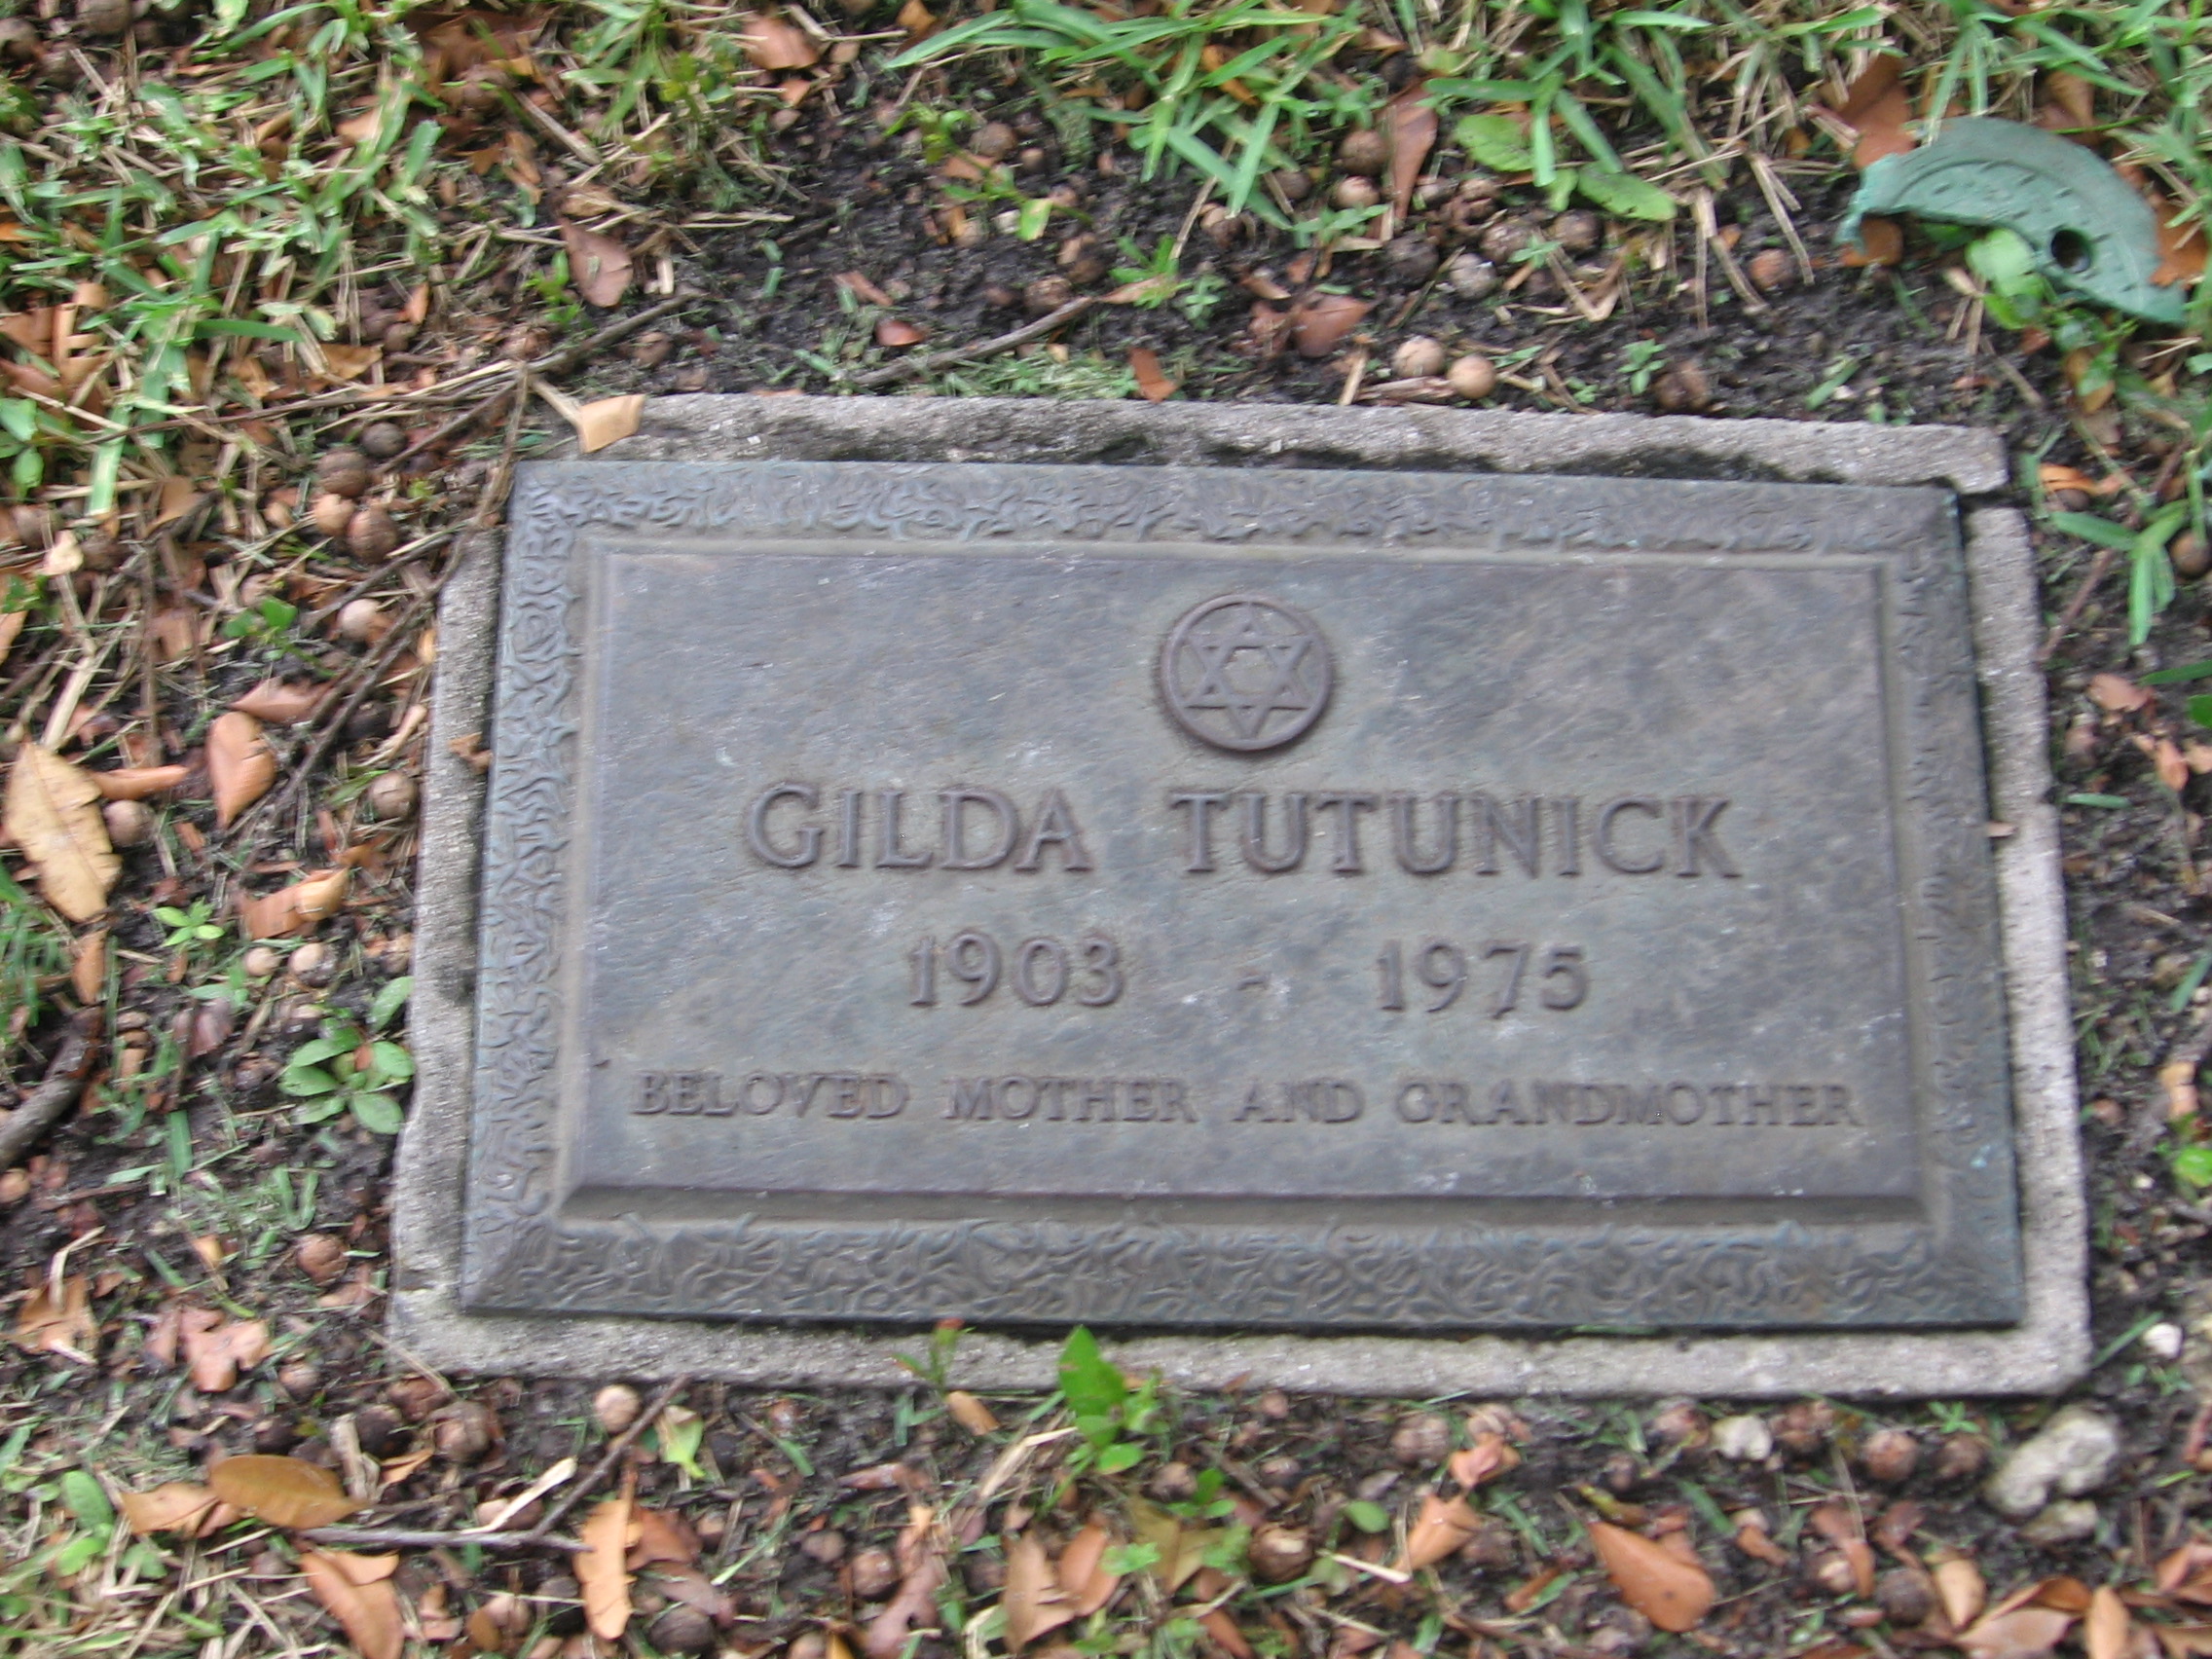 Gilda Tutunick